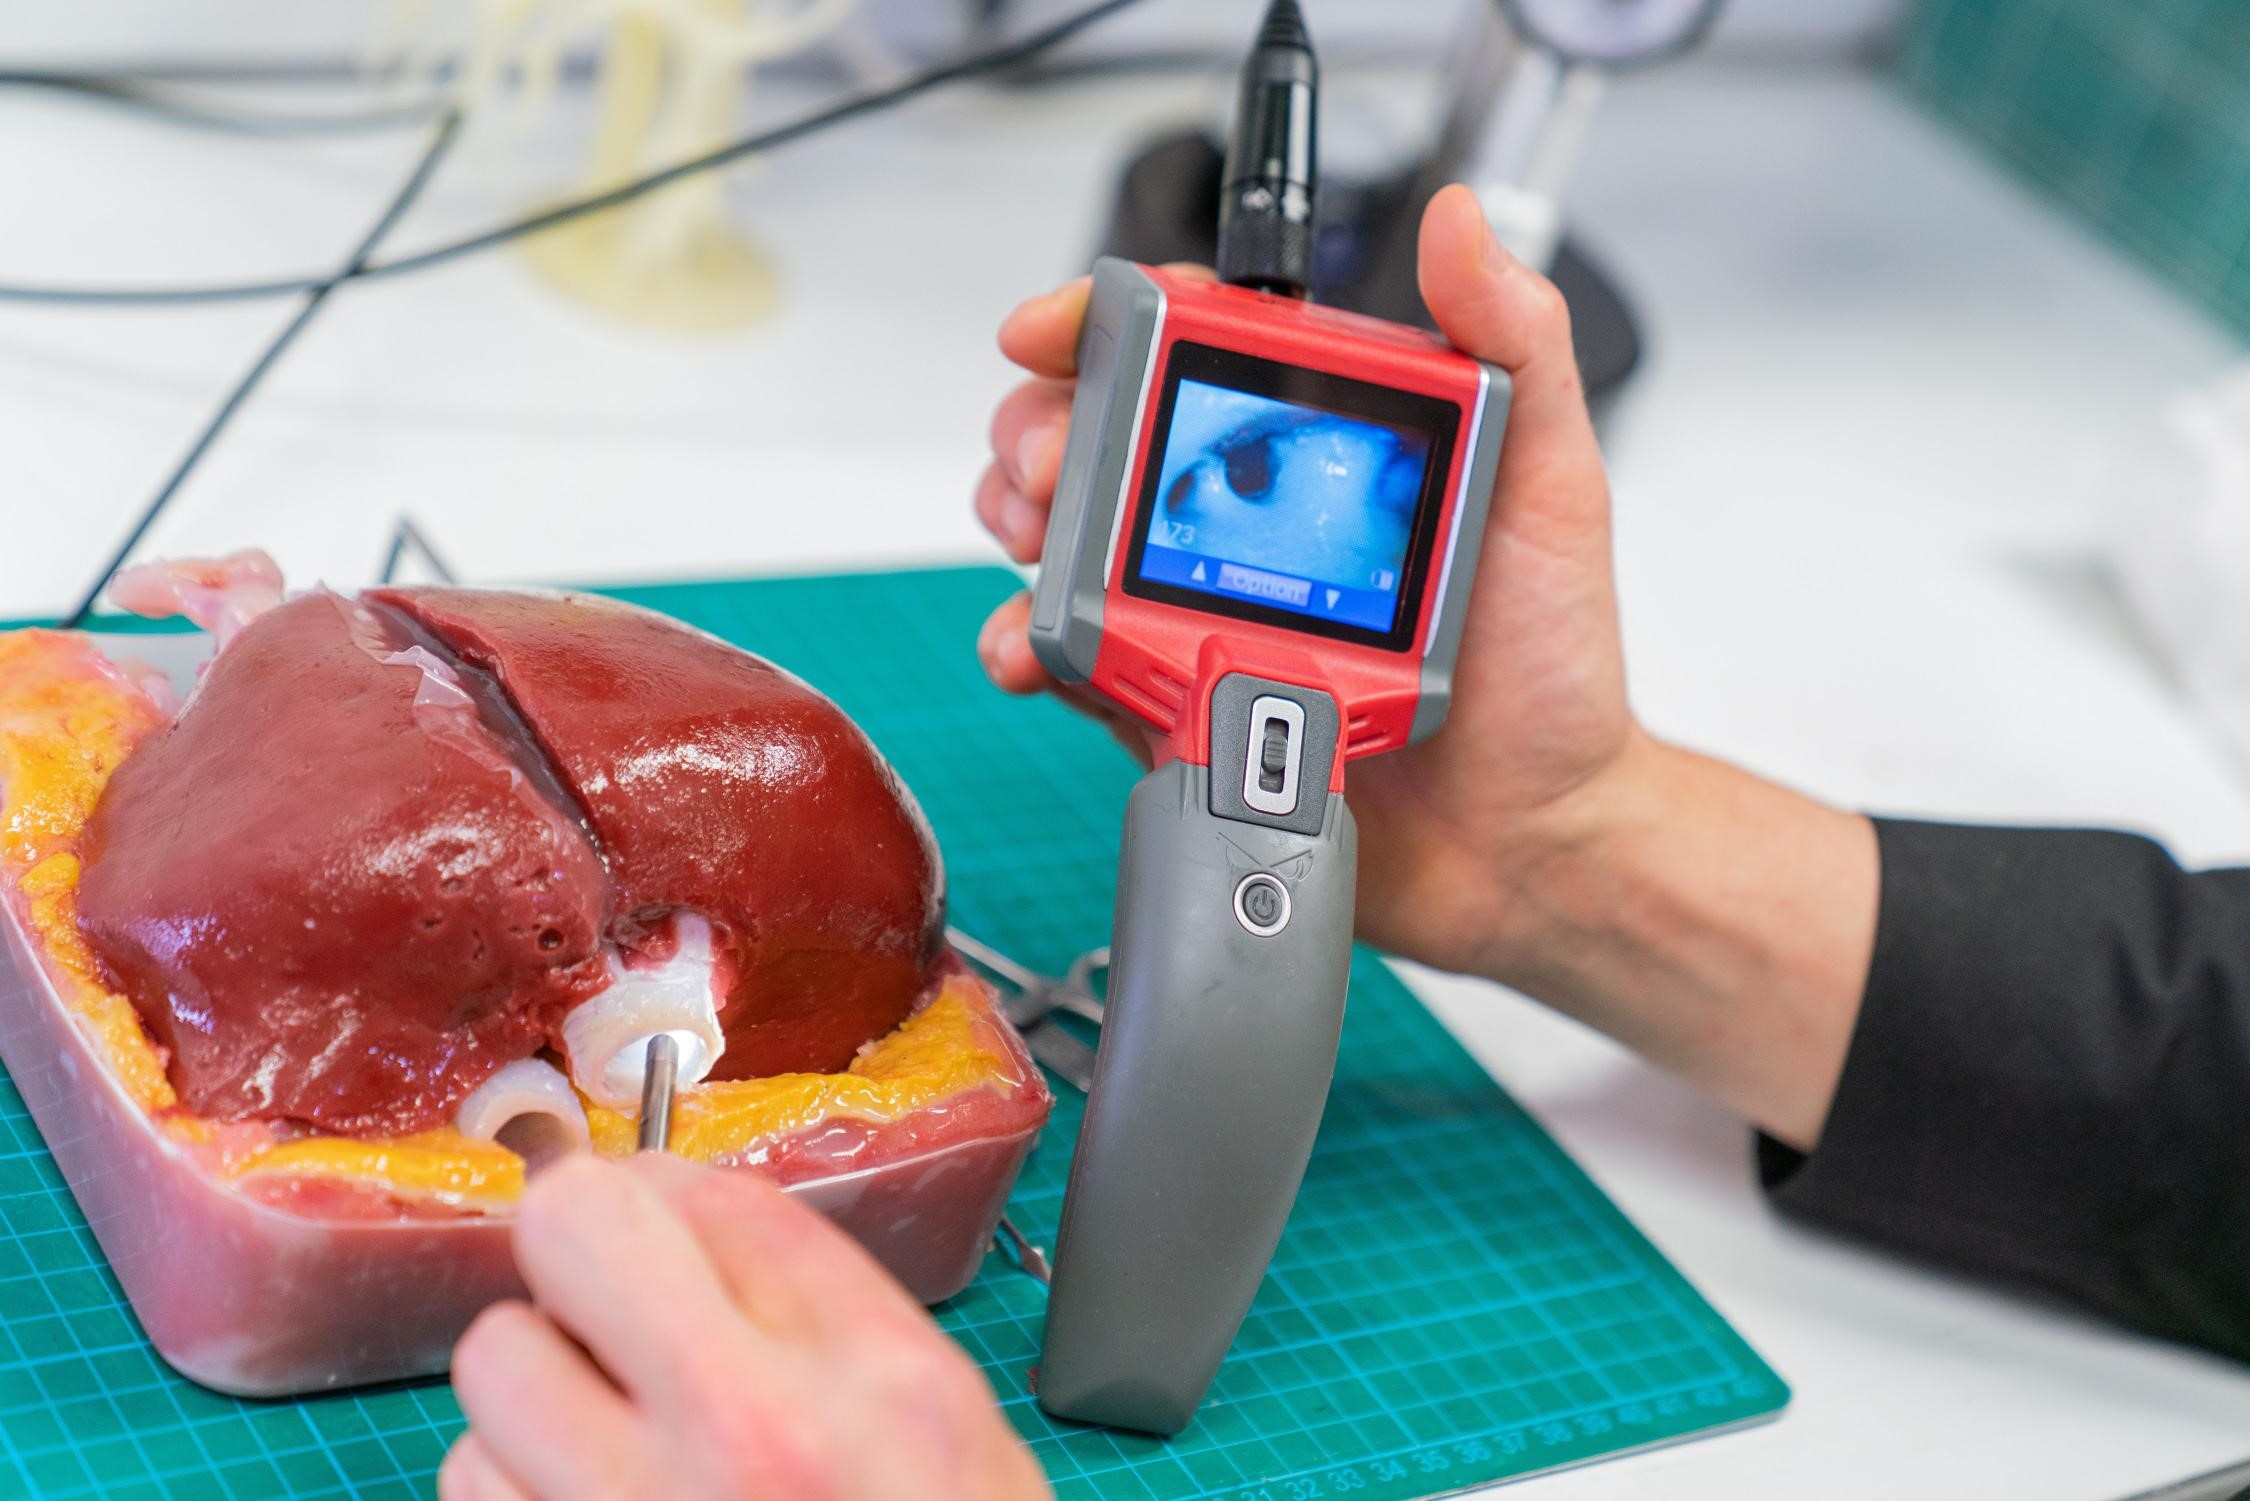 3D printed liver